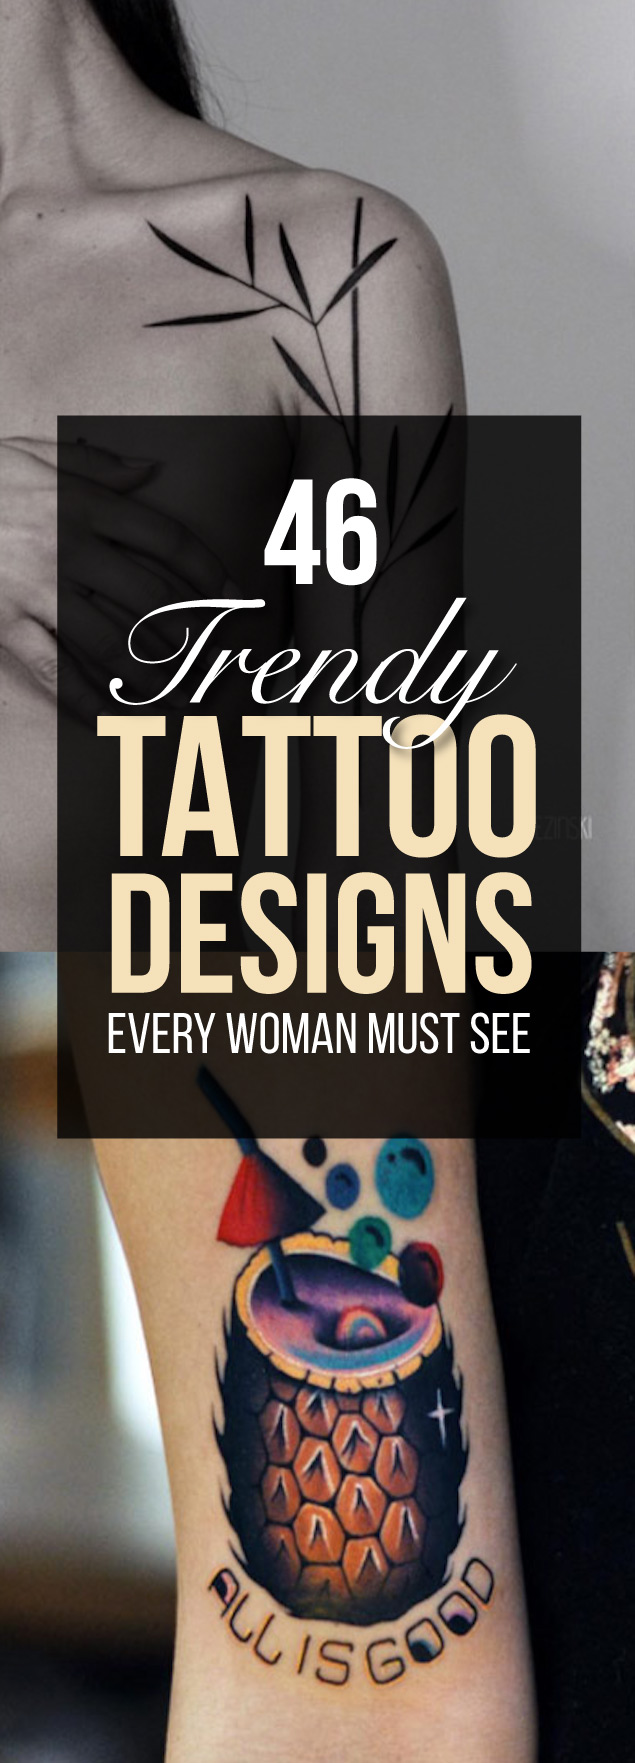 46 Trendy Tattoo Designs Every Woman Must See | TattooBlend